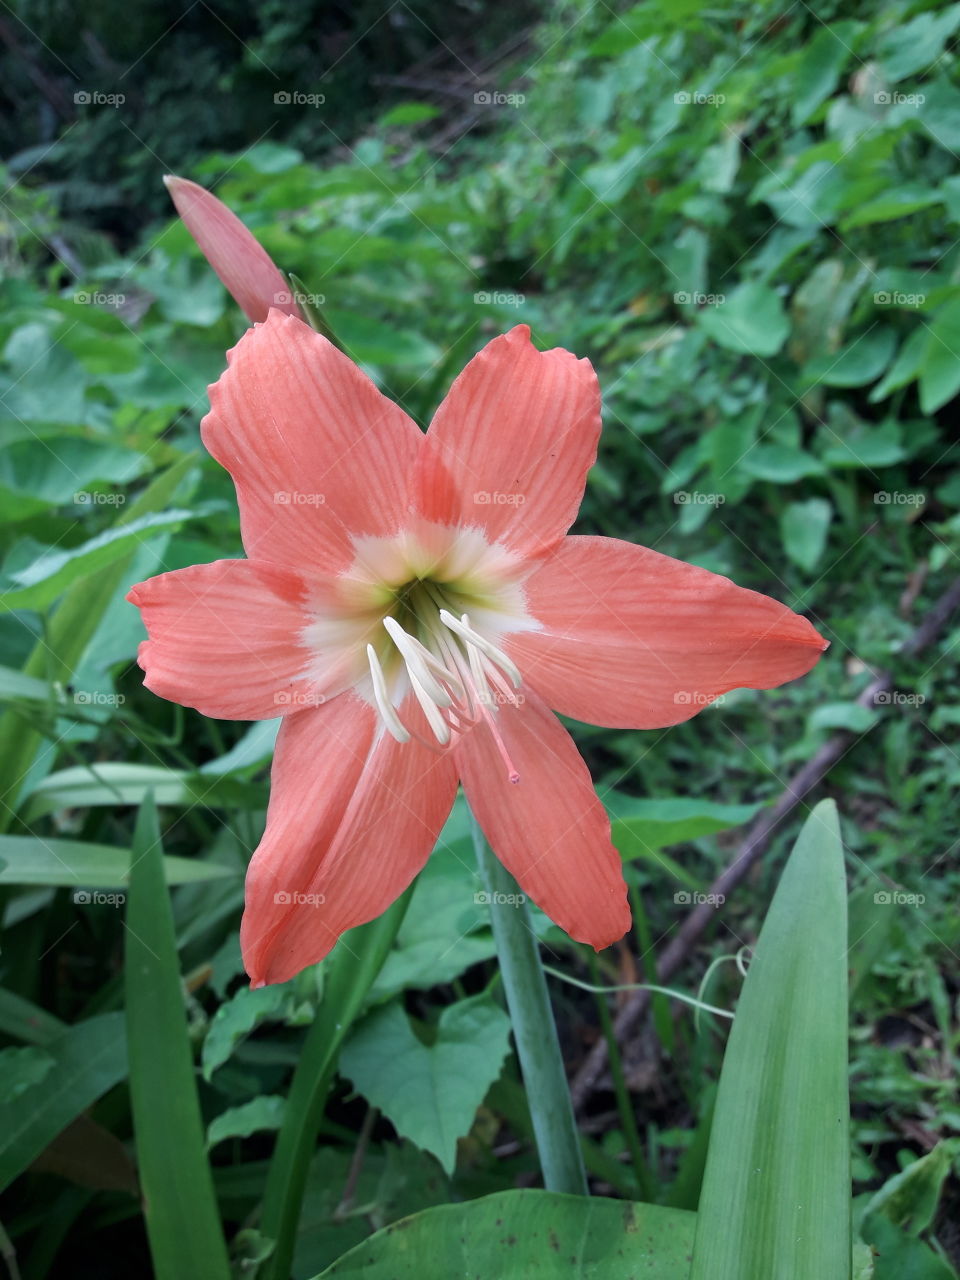 Amaryllis Lily flower